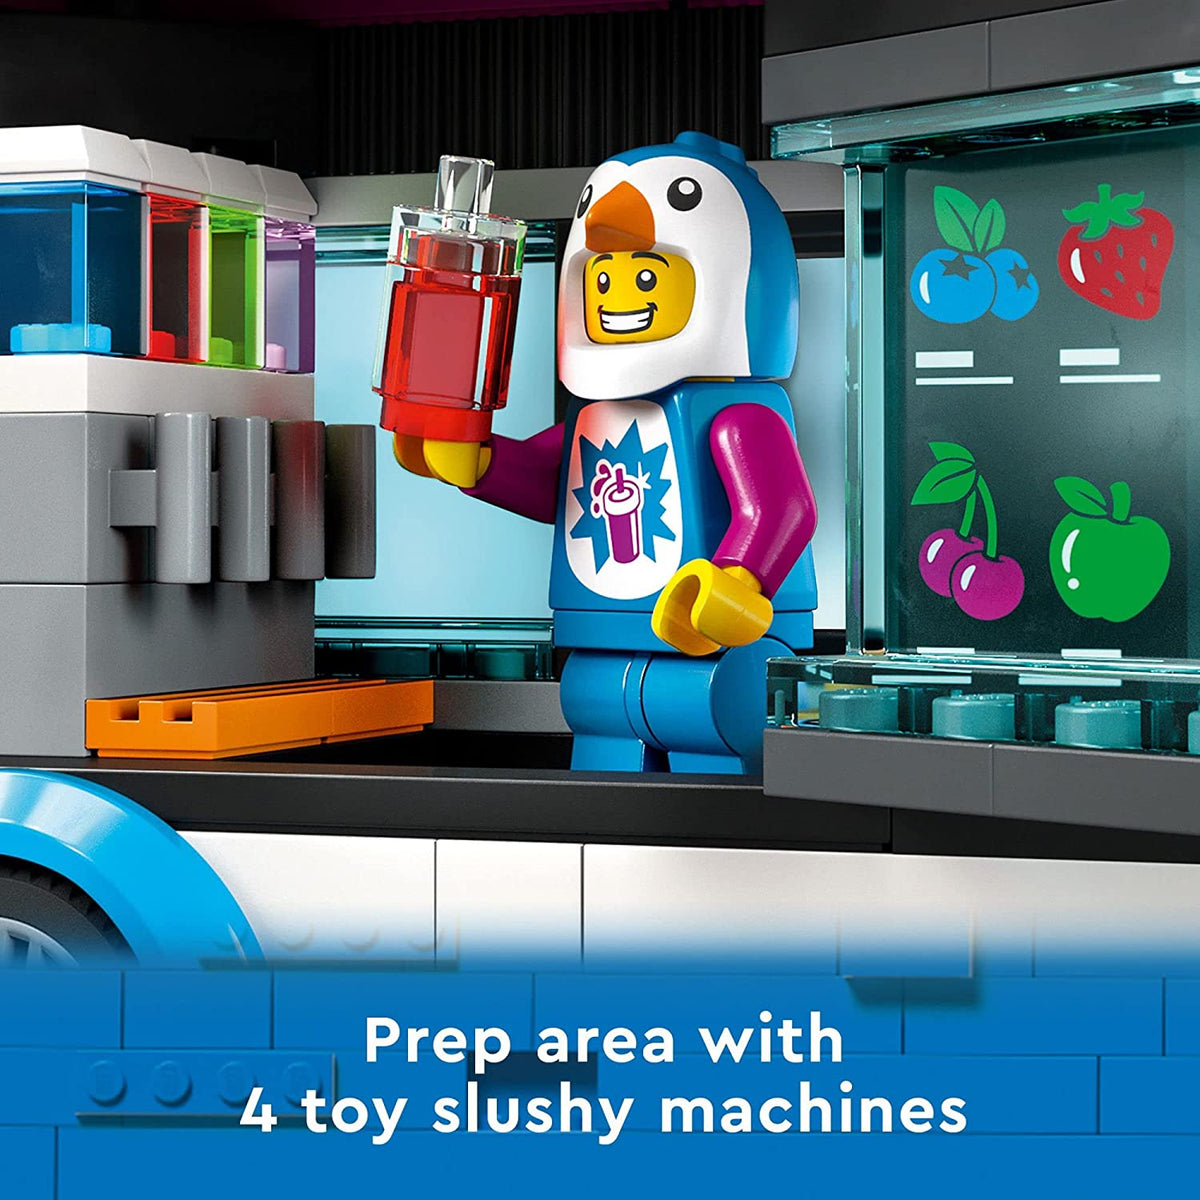 LEGO 60384 City Penguin Slushy Van